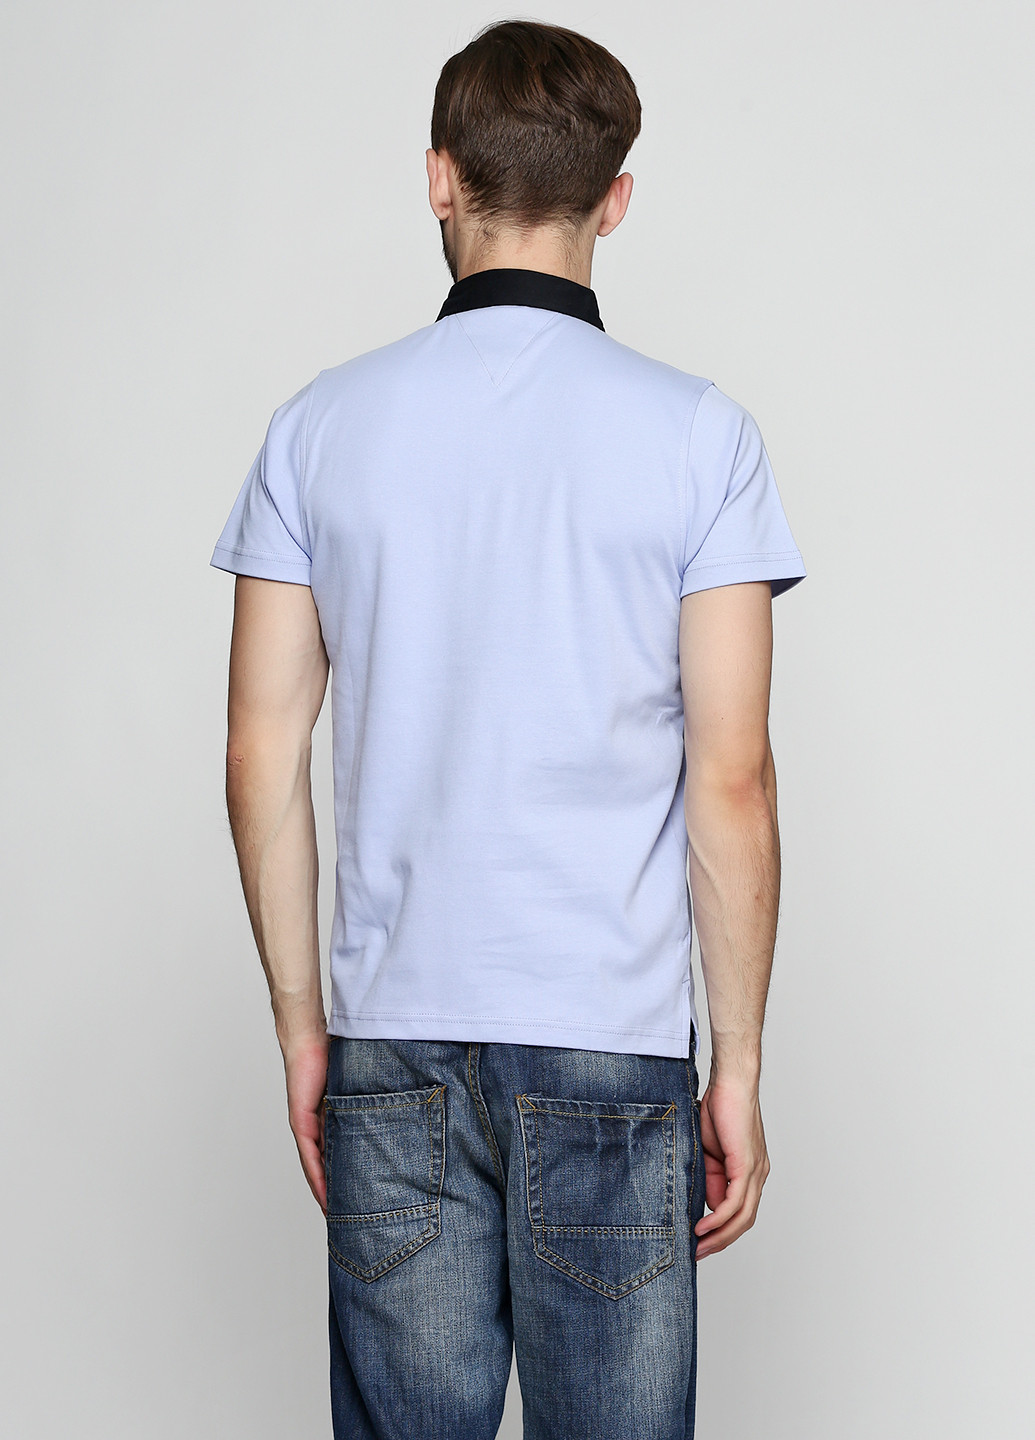 Сиреневая футболка-поло для мужчин Tommy Hilfiger однотонная